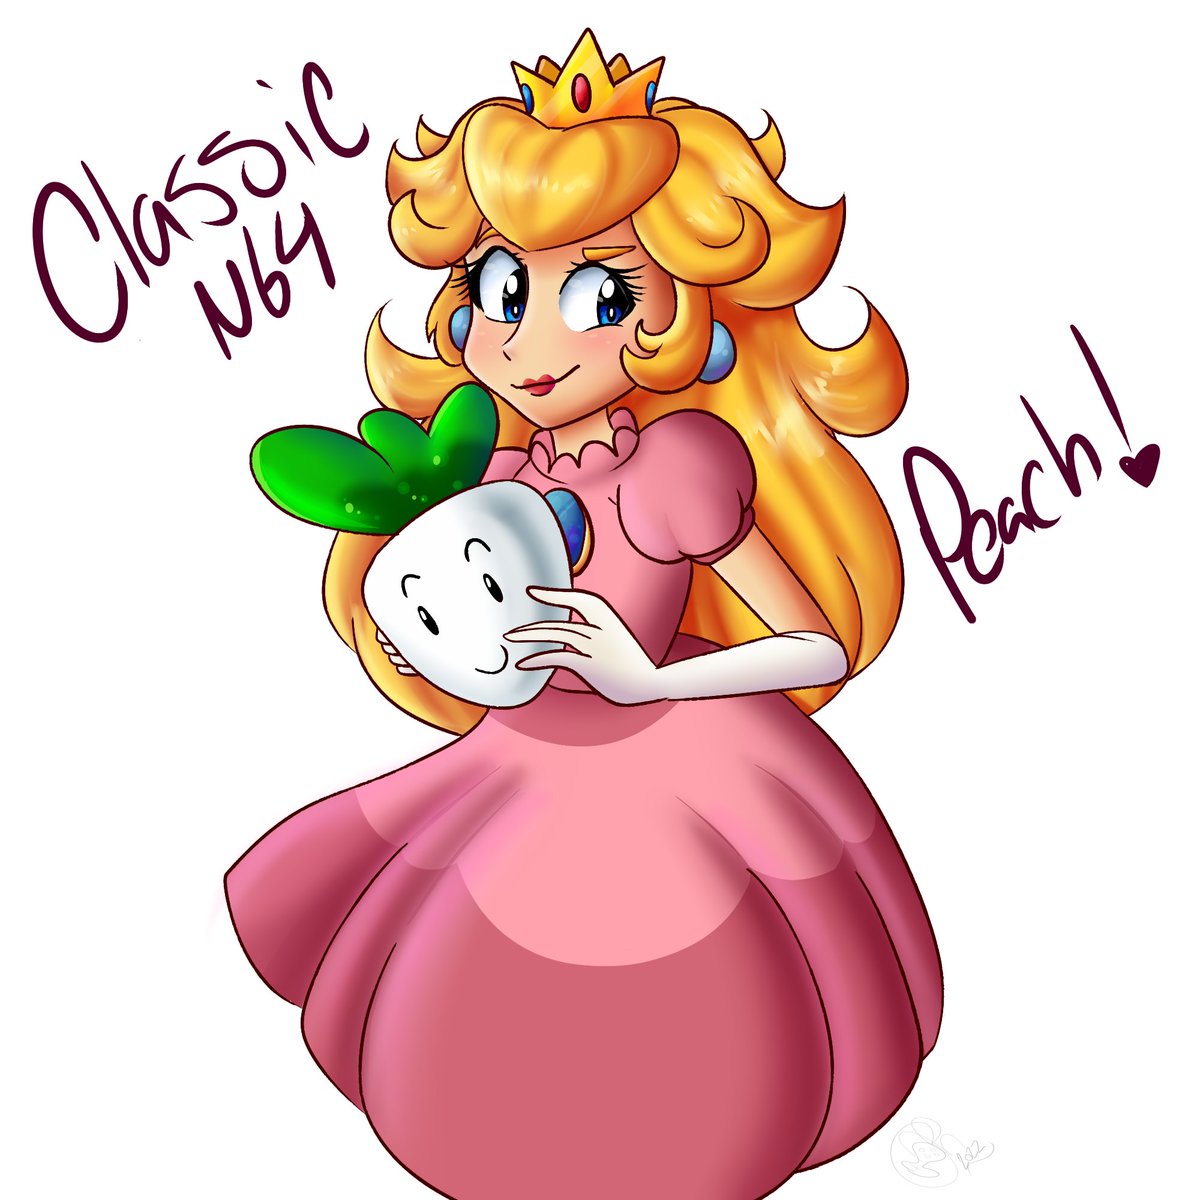 Classic N64 Peach redraw 💕❣️🍑

#SupeMarioBros #Nintendo #PrincessPeach #ArtistOnTwitter